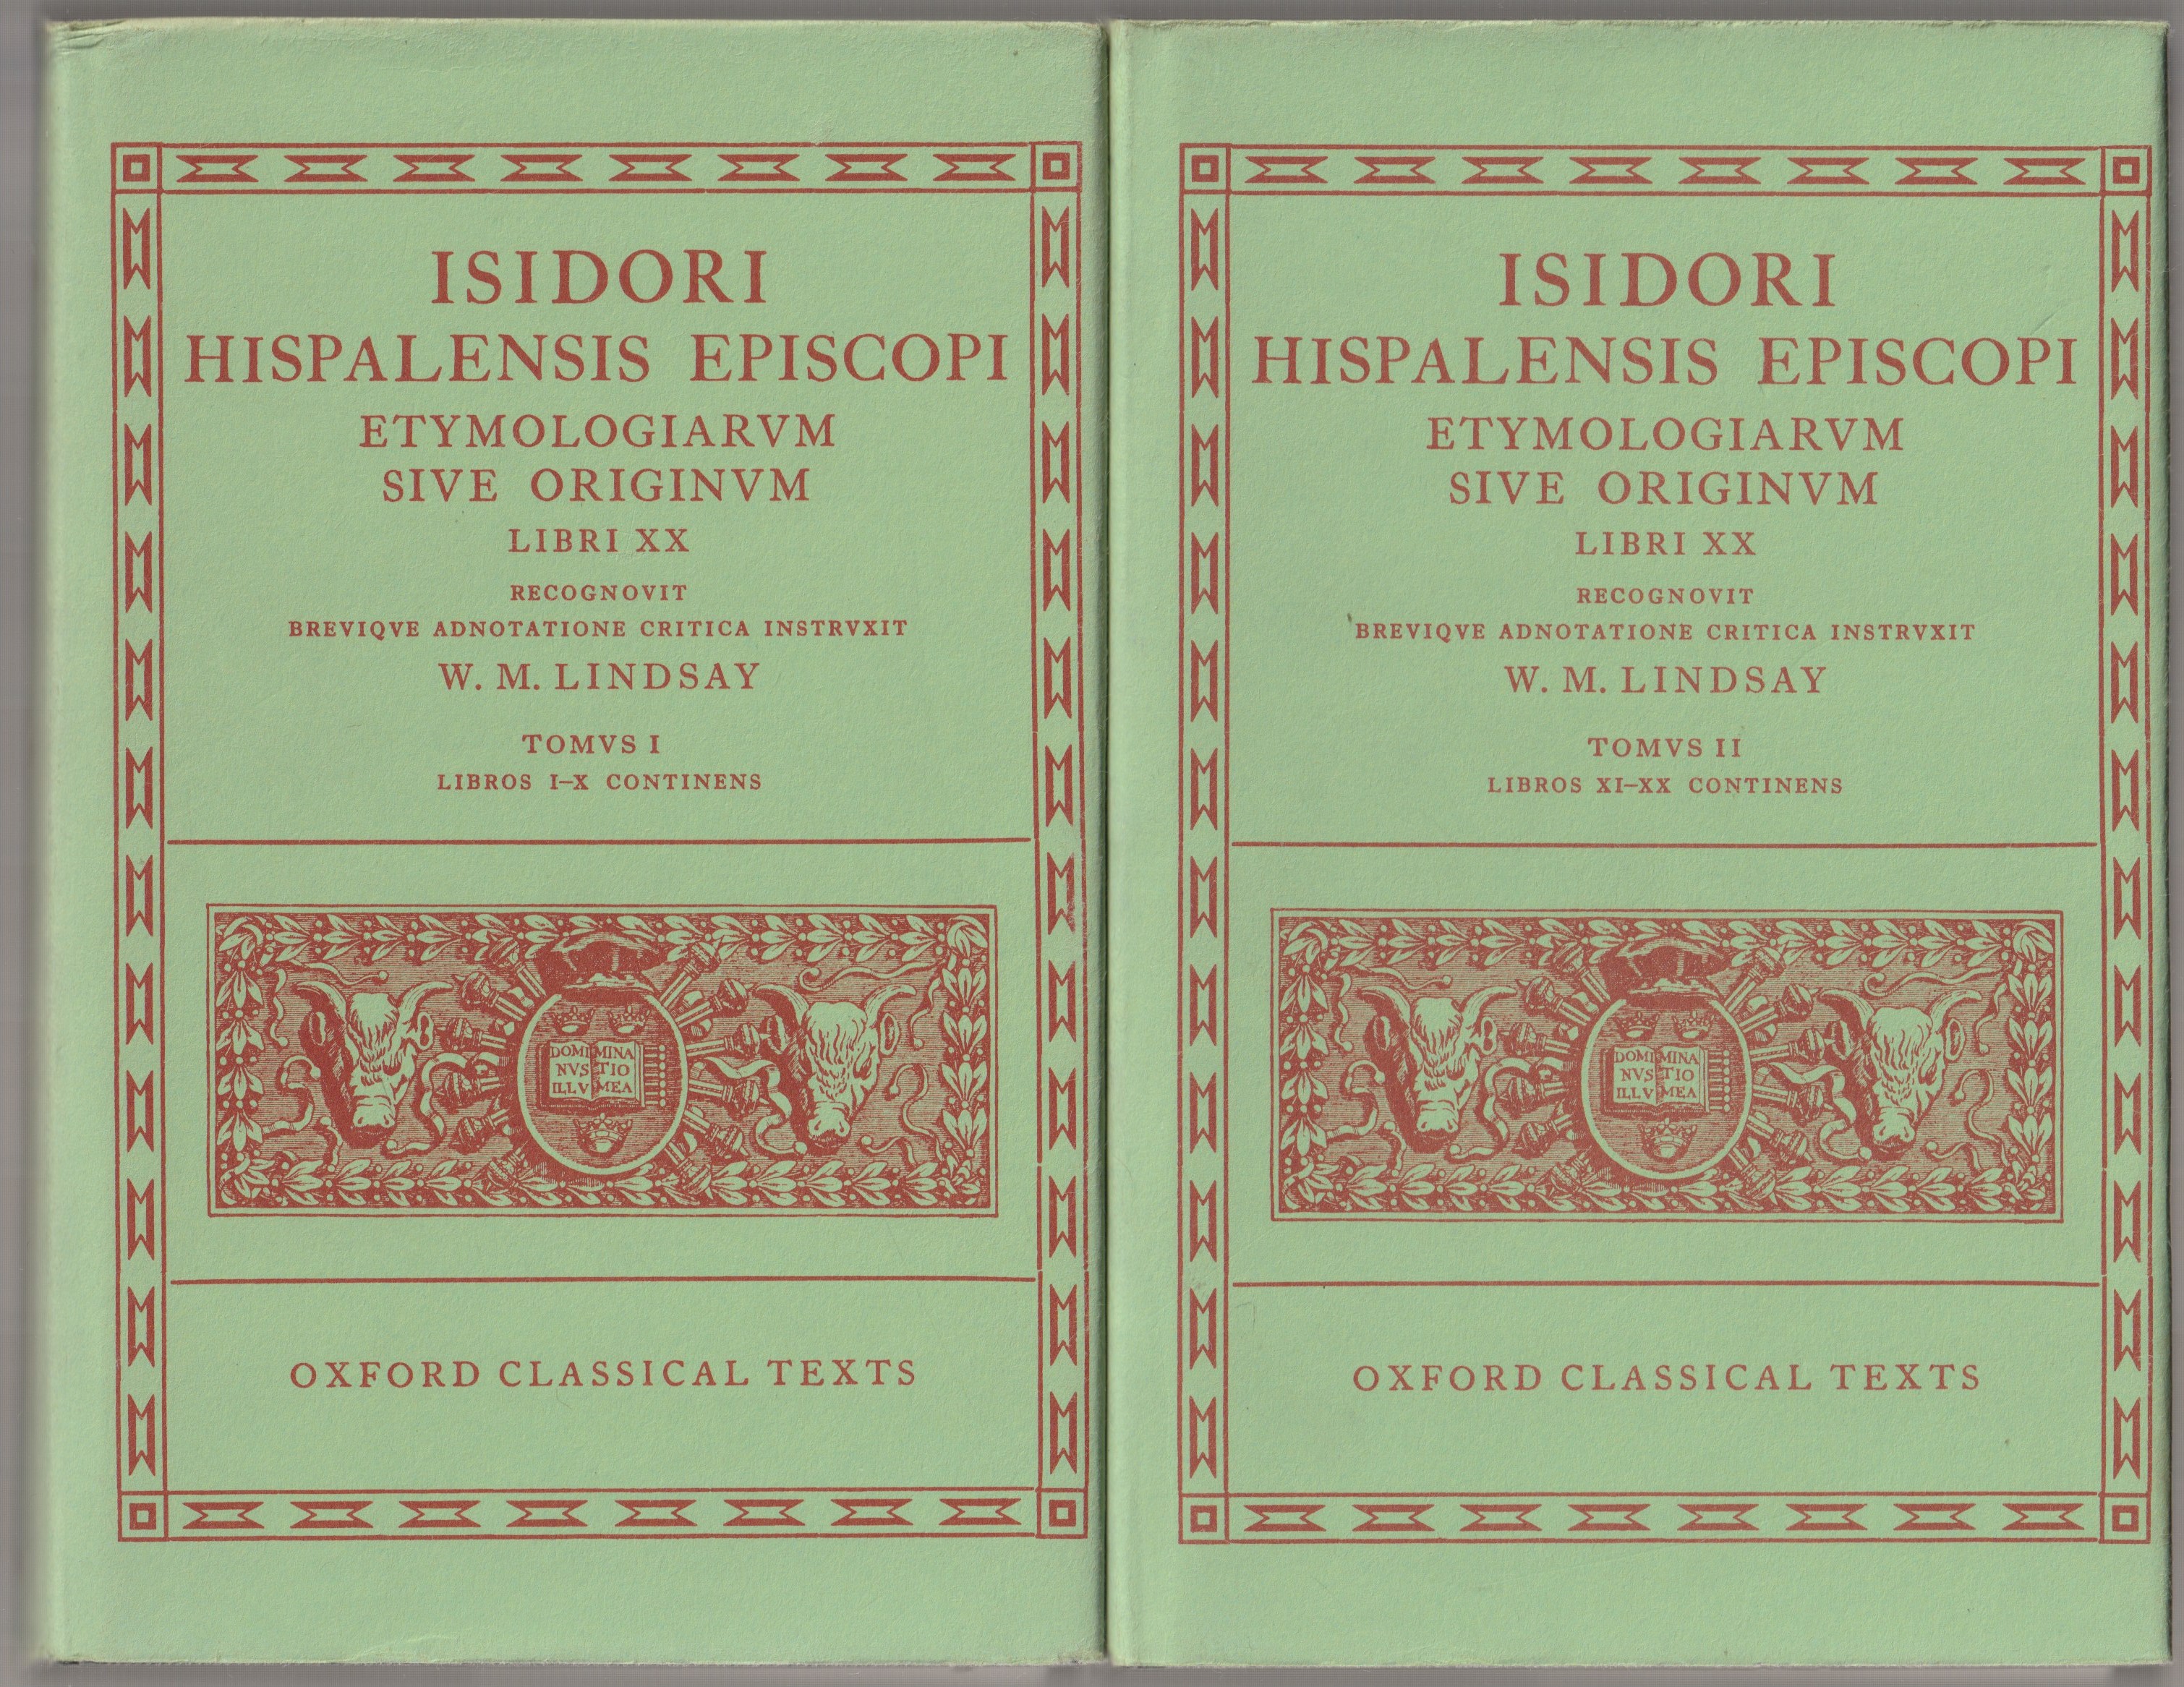 Isidori Hispalensis Episcopi Etymologiarum sive originum libri XX, t. 1. Libros I-X continens